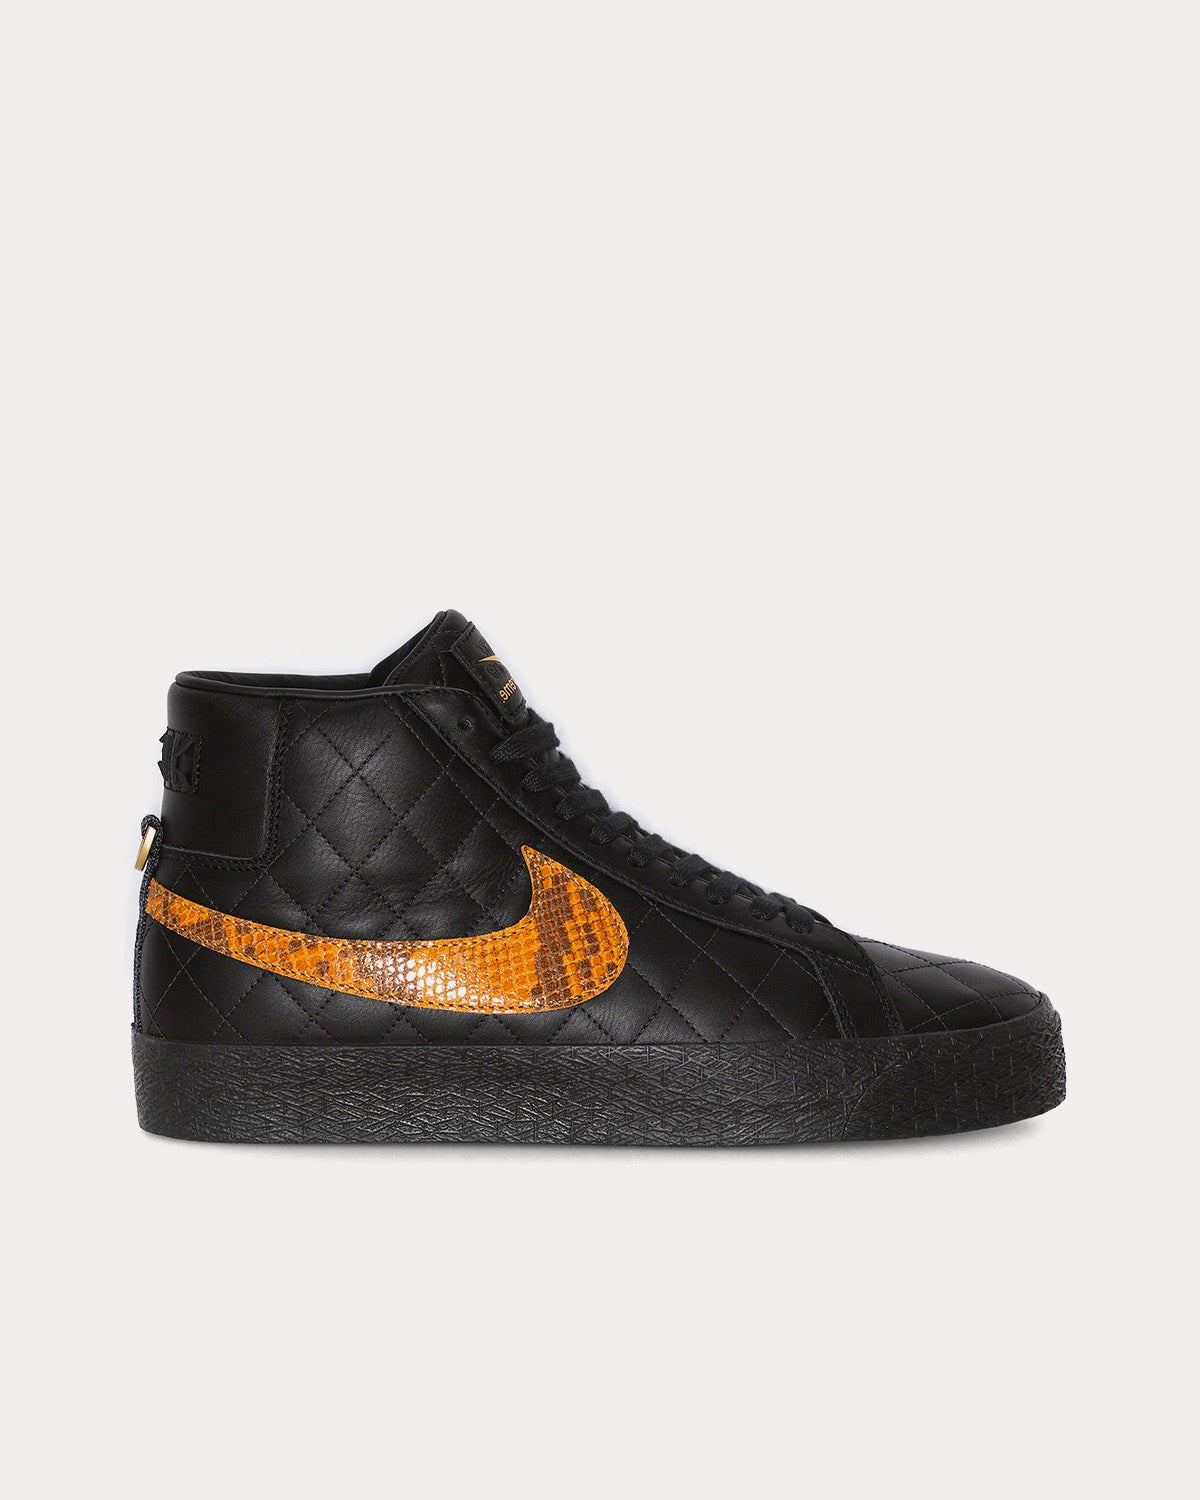 Nike x Supreme SB Blazer Mid Black High Top Sneakers - Sneak in Peace